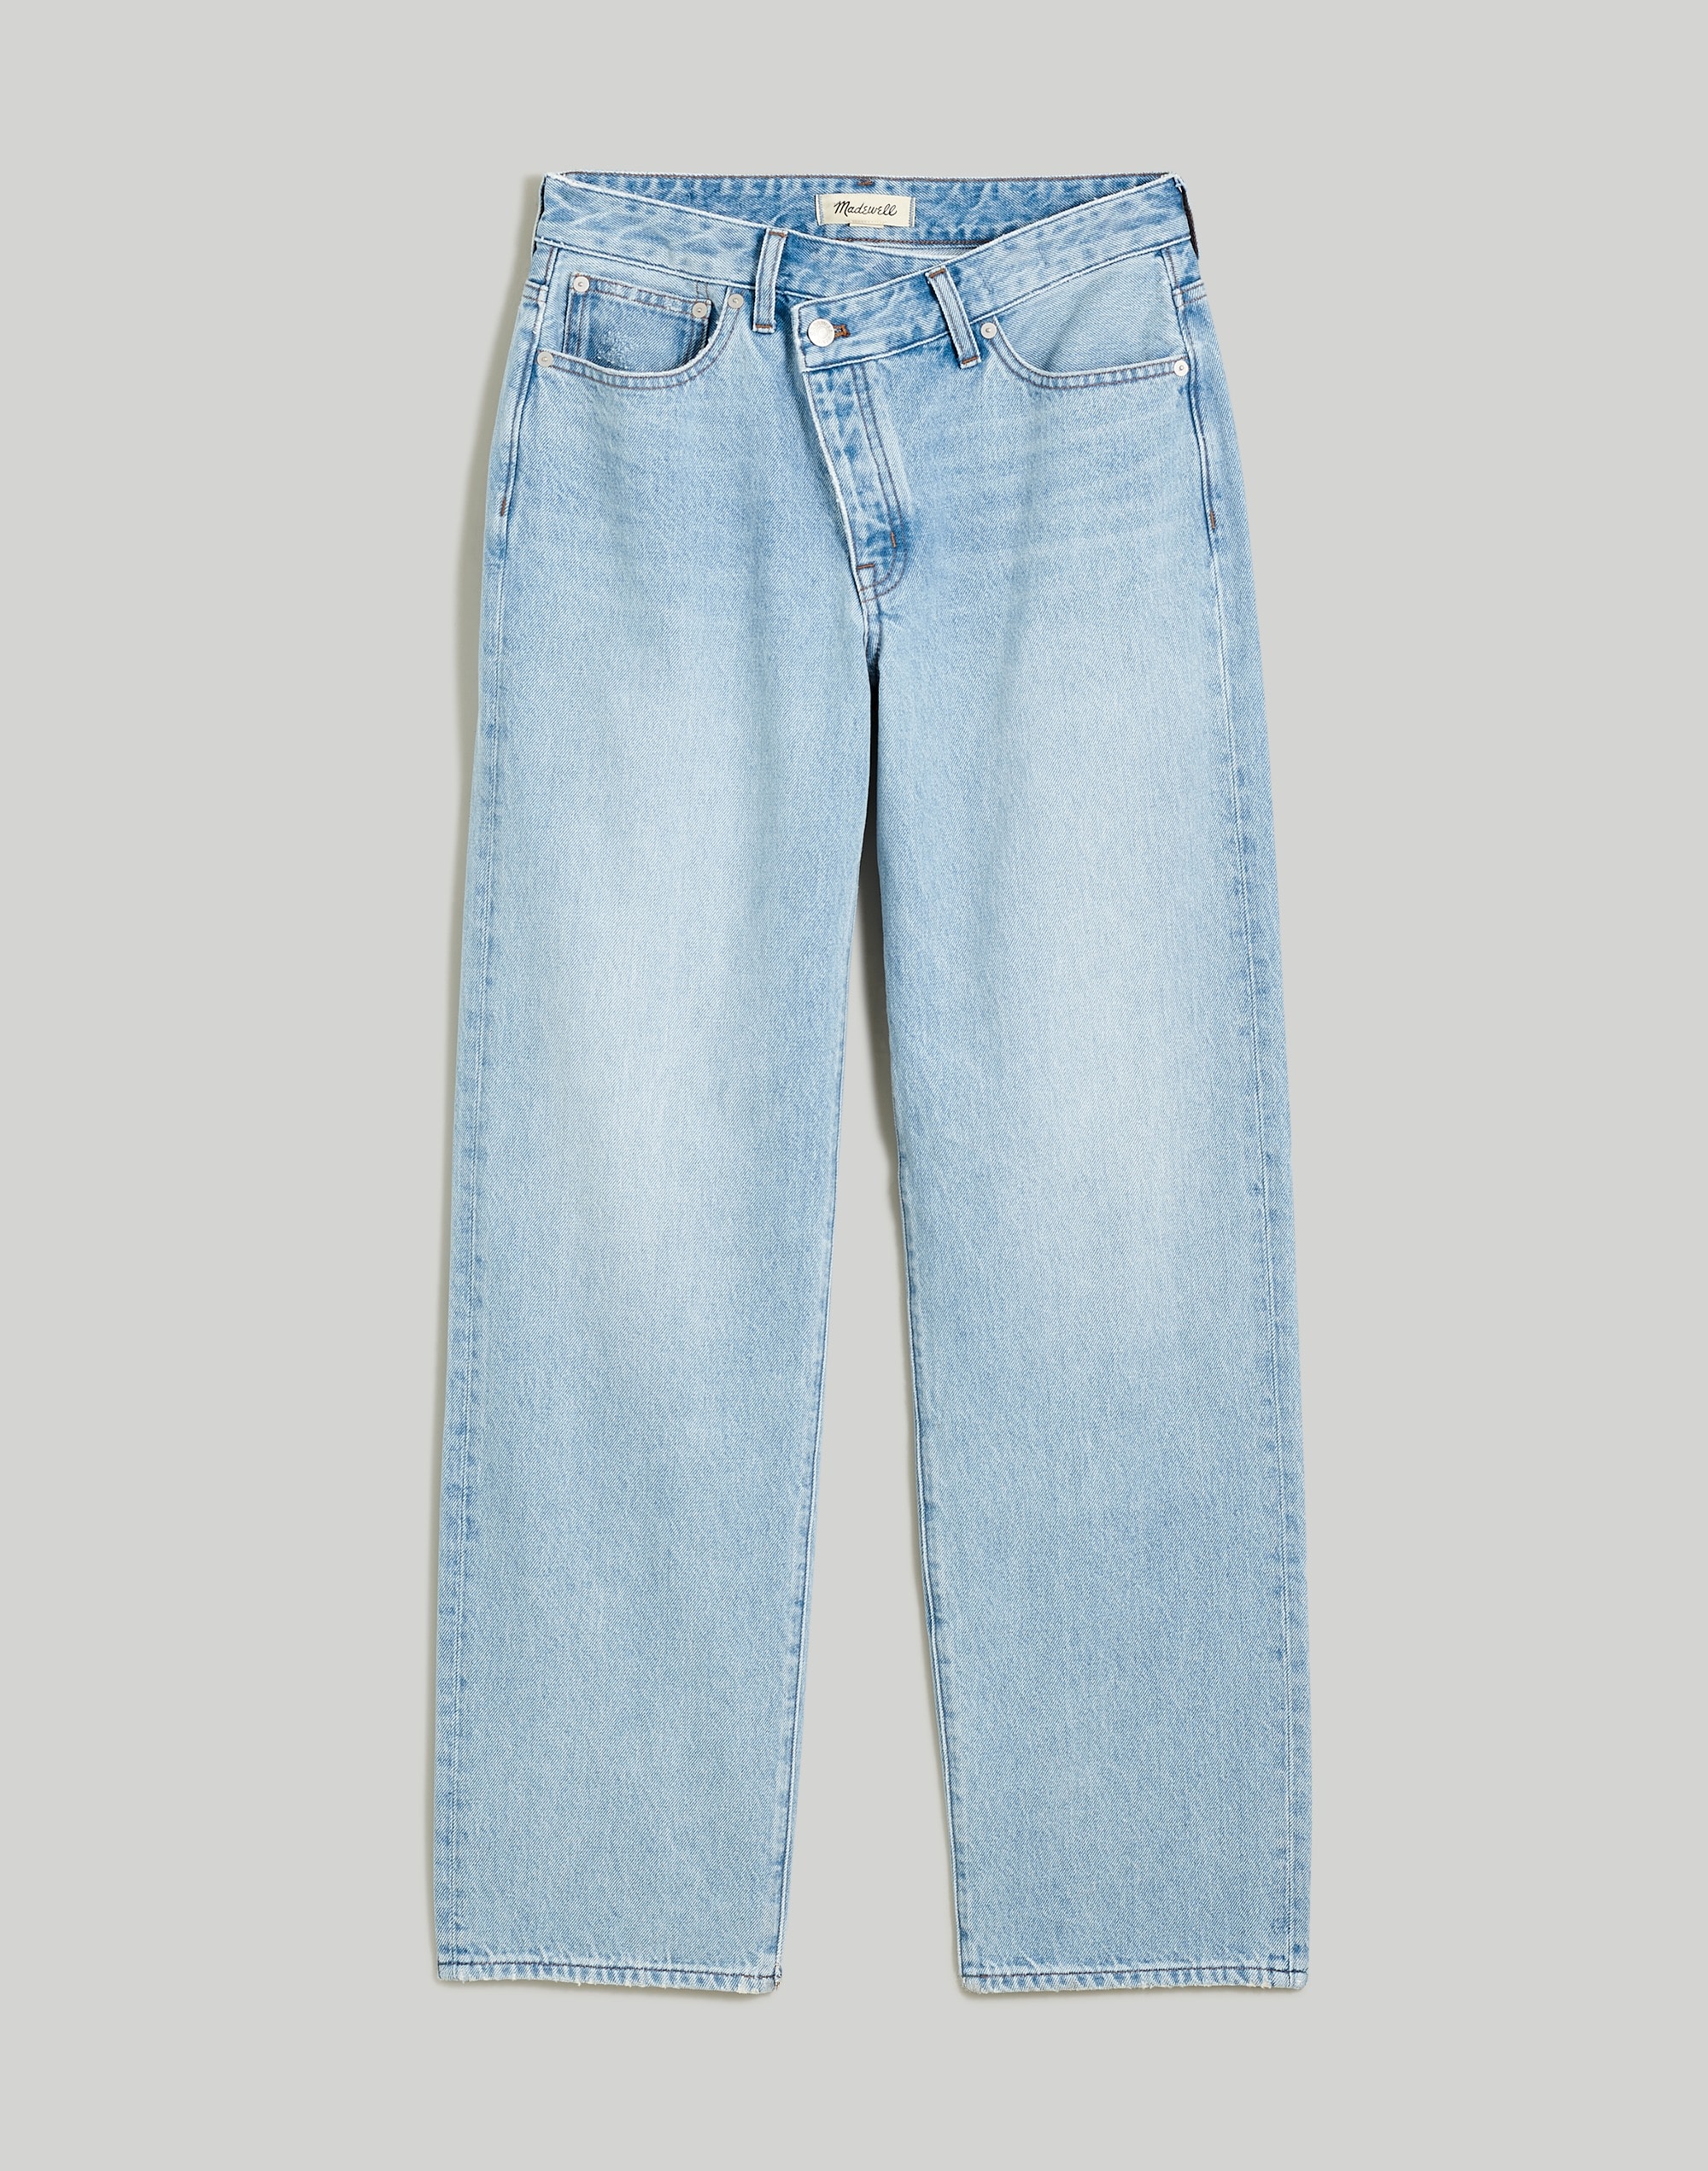 Curvy Low-Slung Straight Jeans Sevilla Wash: Cross-Tab Edition